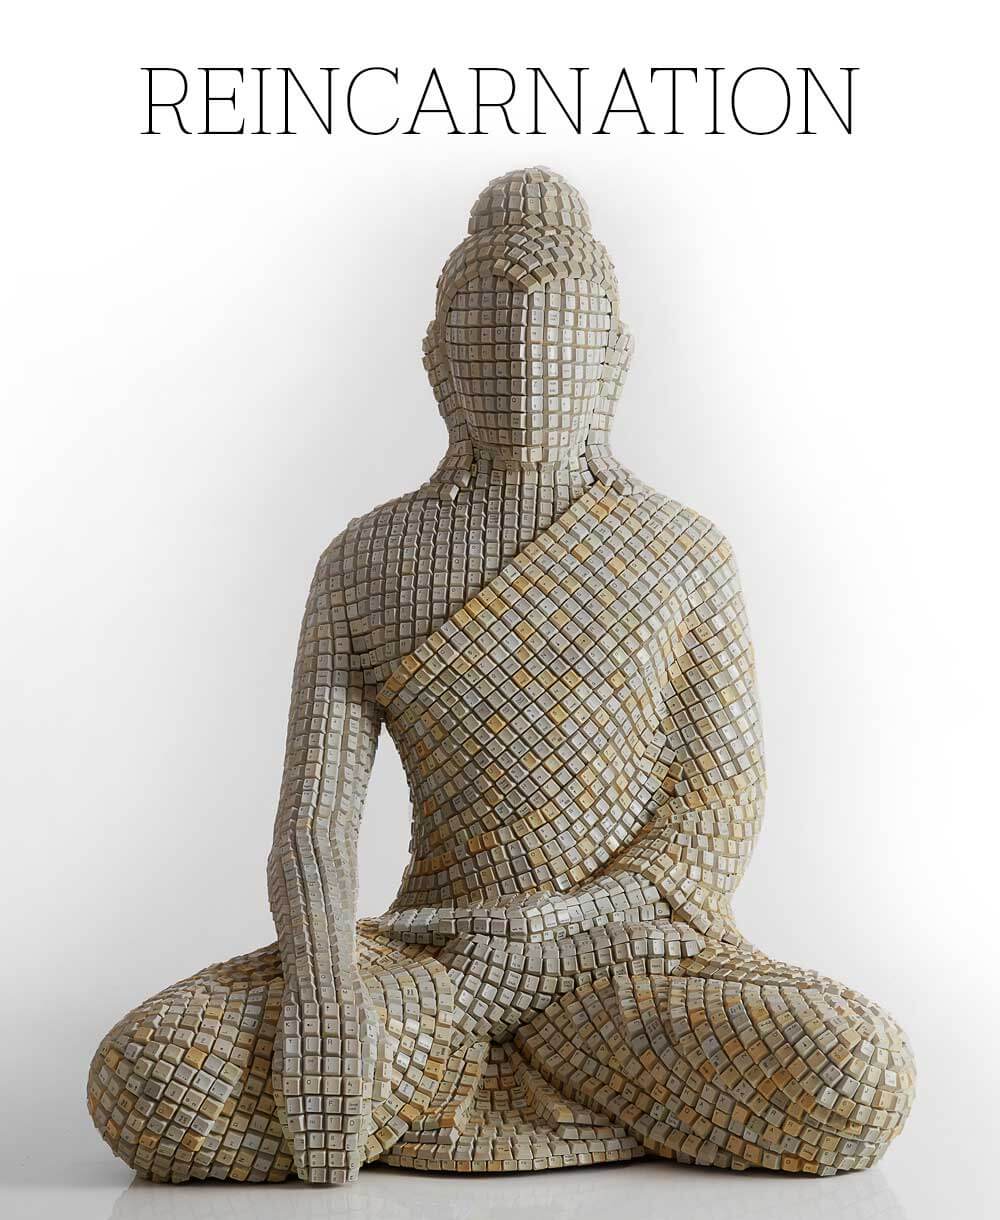 Reincarnation Buddha Sculpture Mobile in Florence Biennale - Sangeetha Abhay